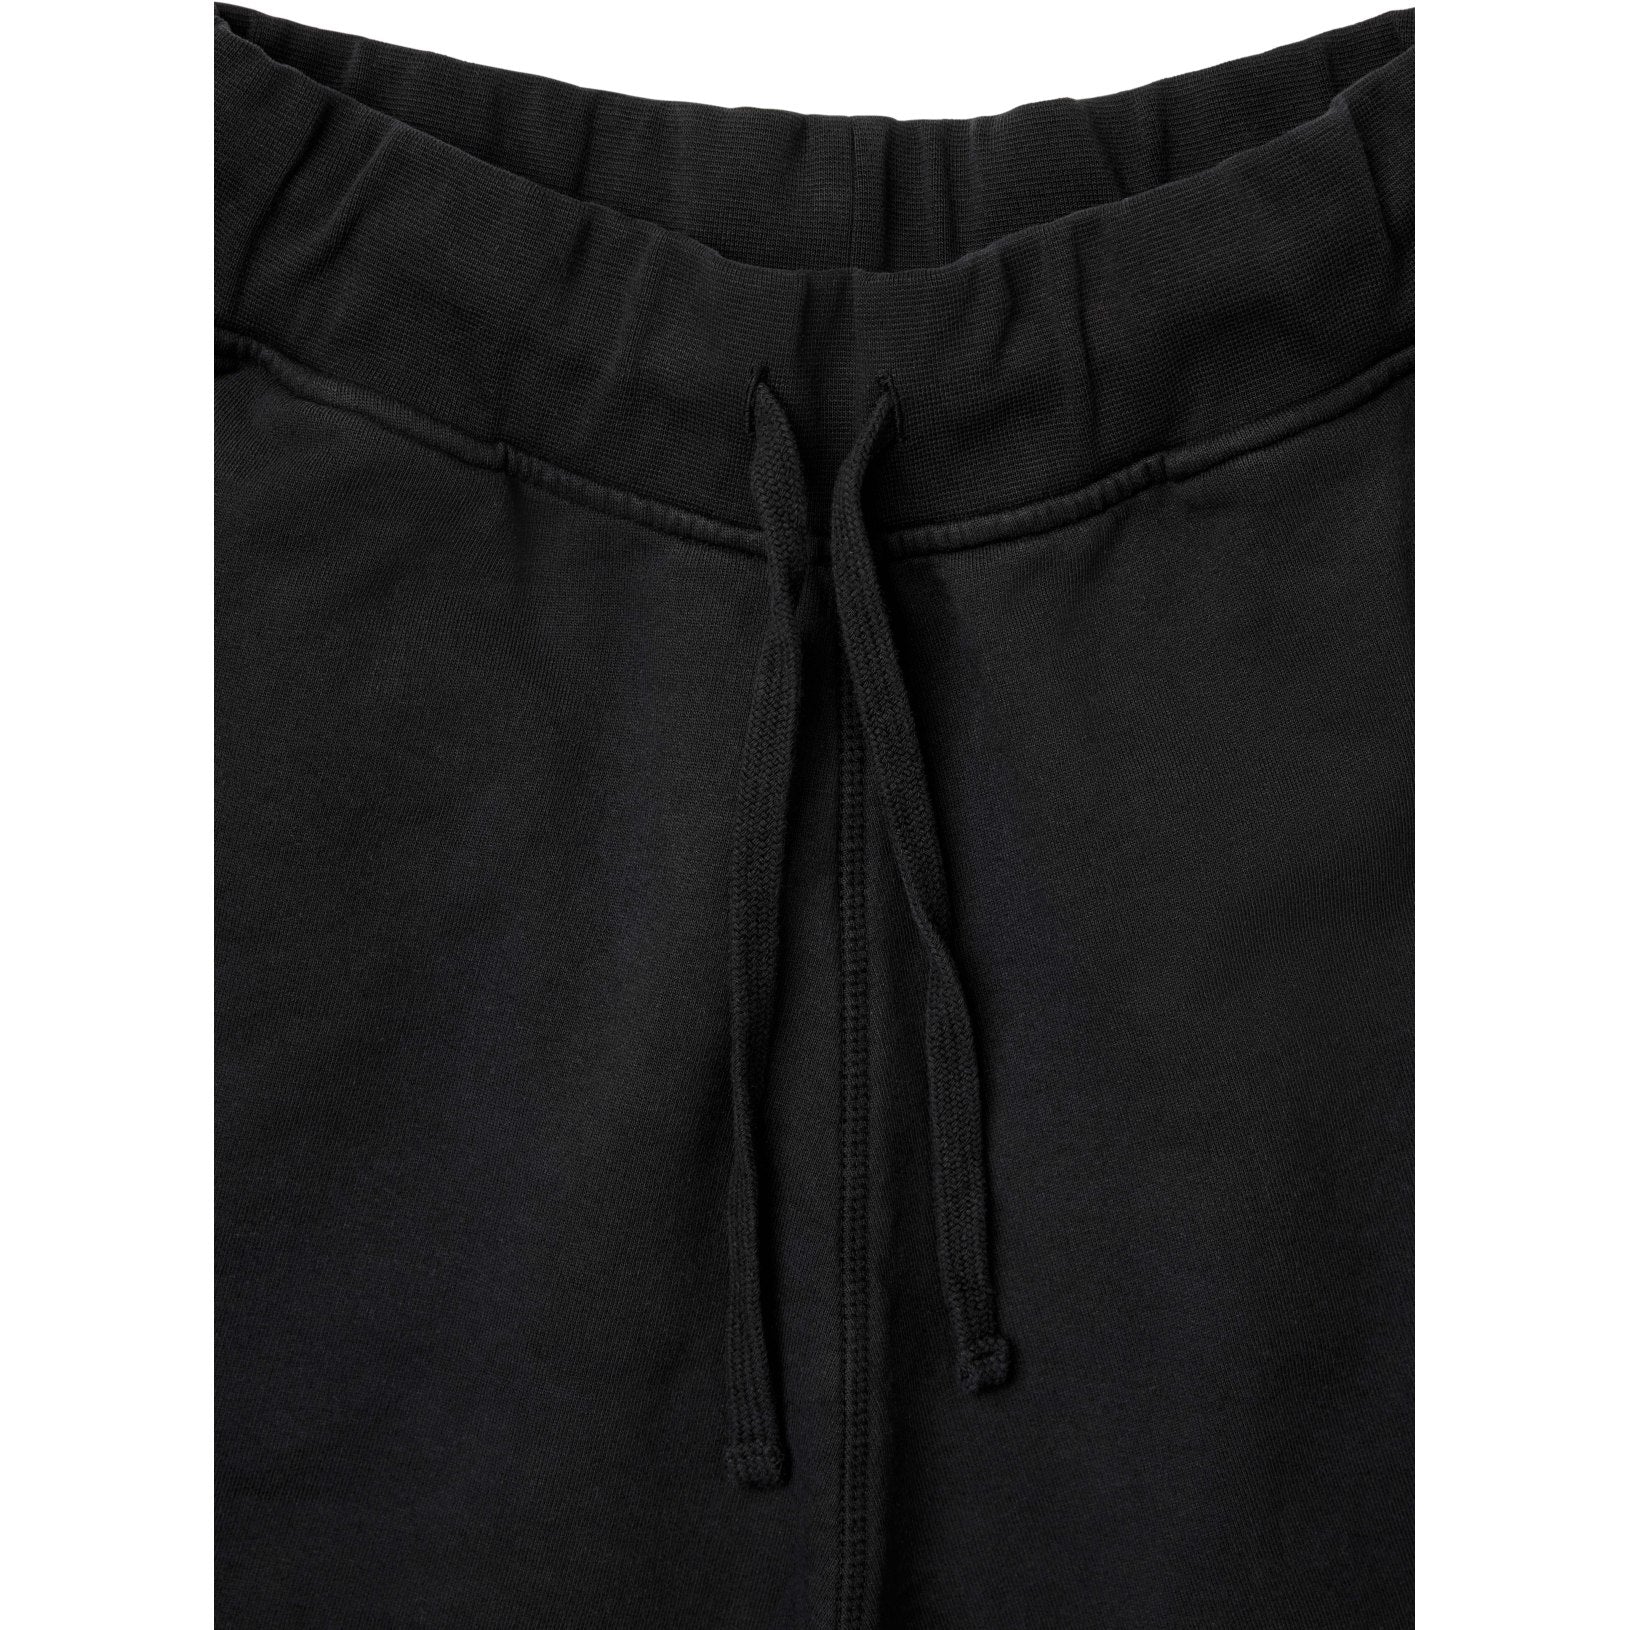 Classic Shorts - Logo Black